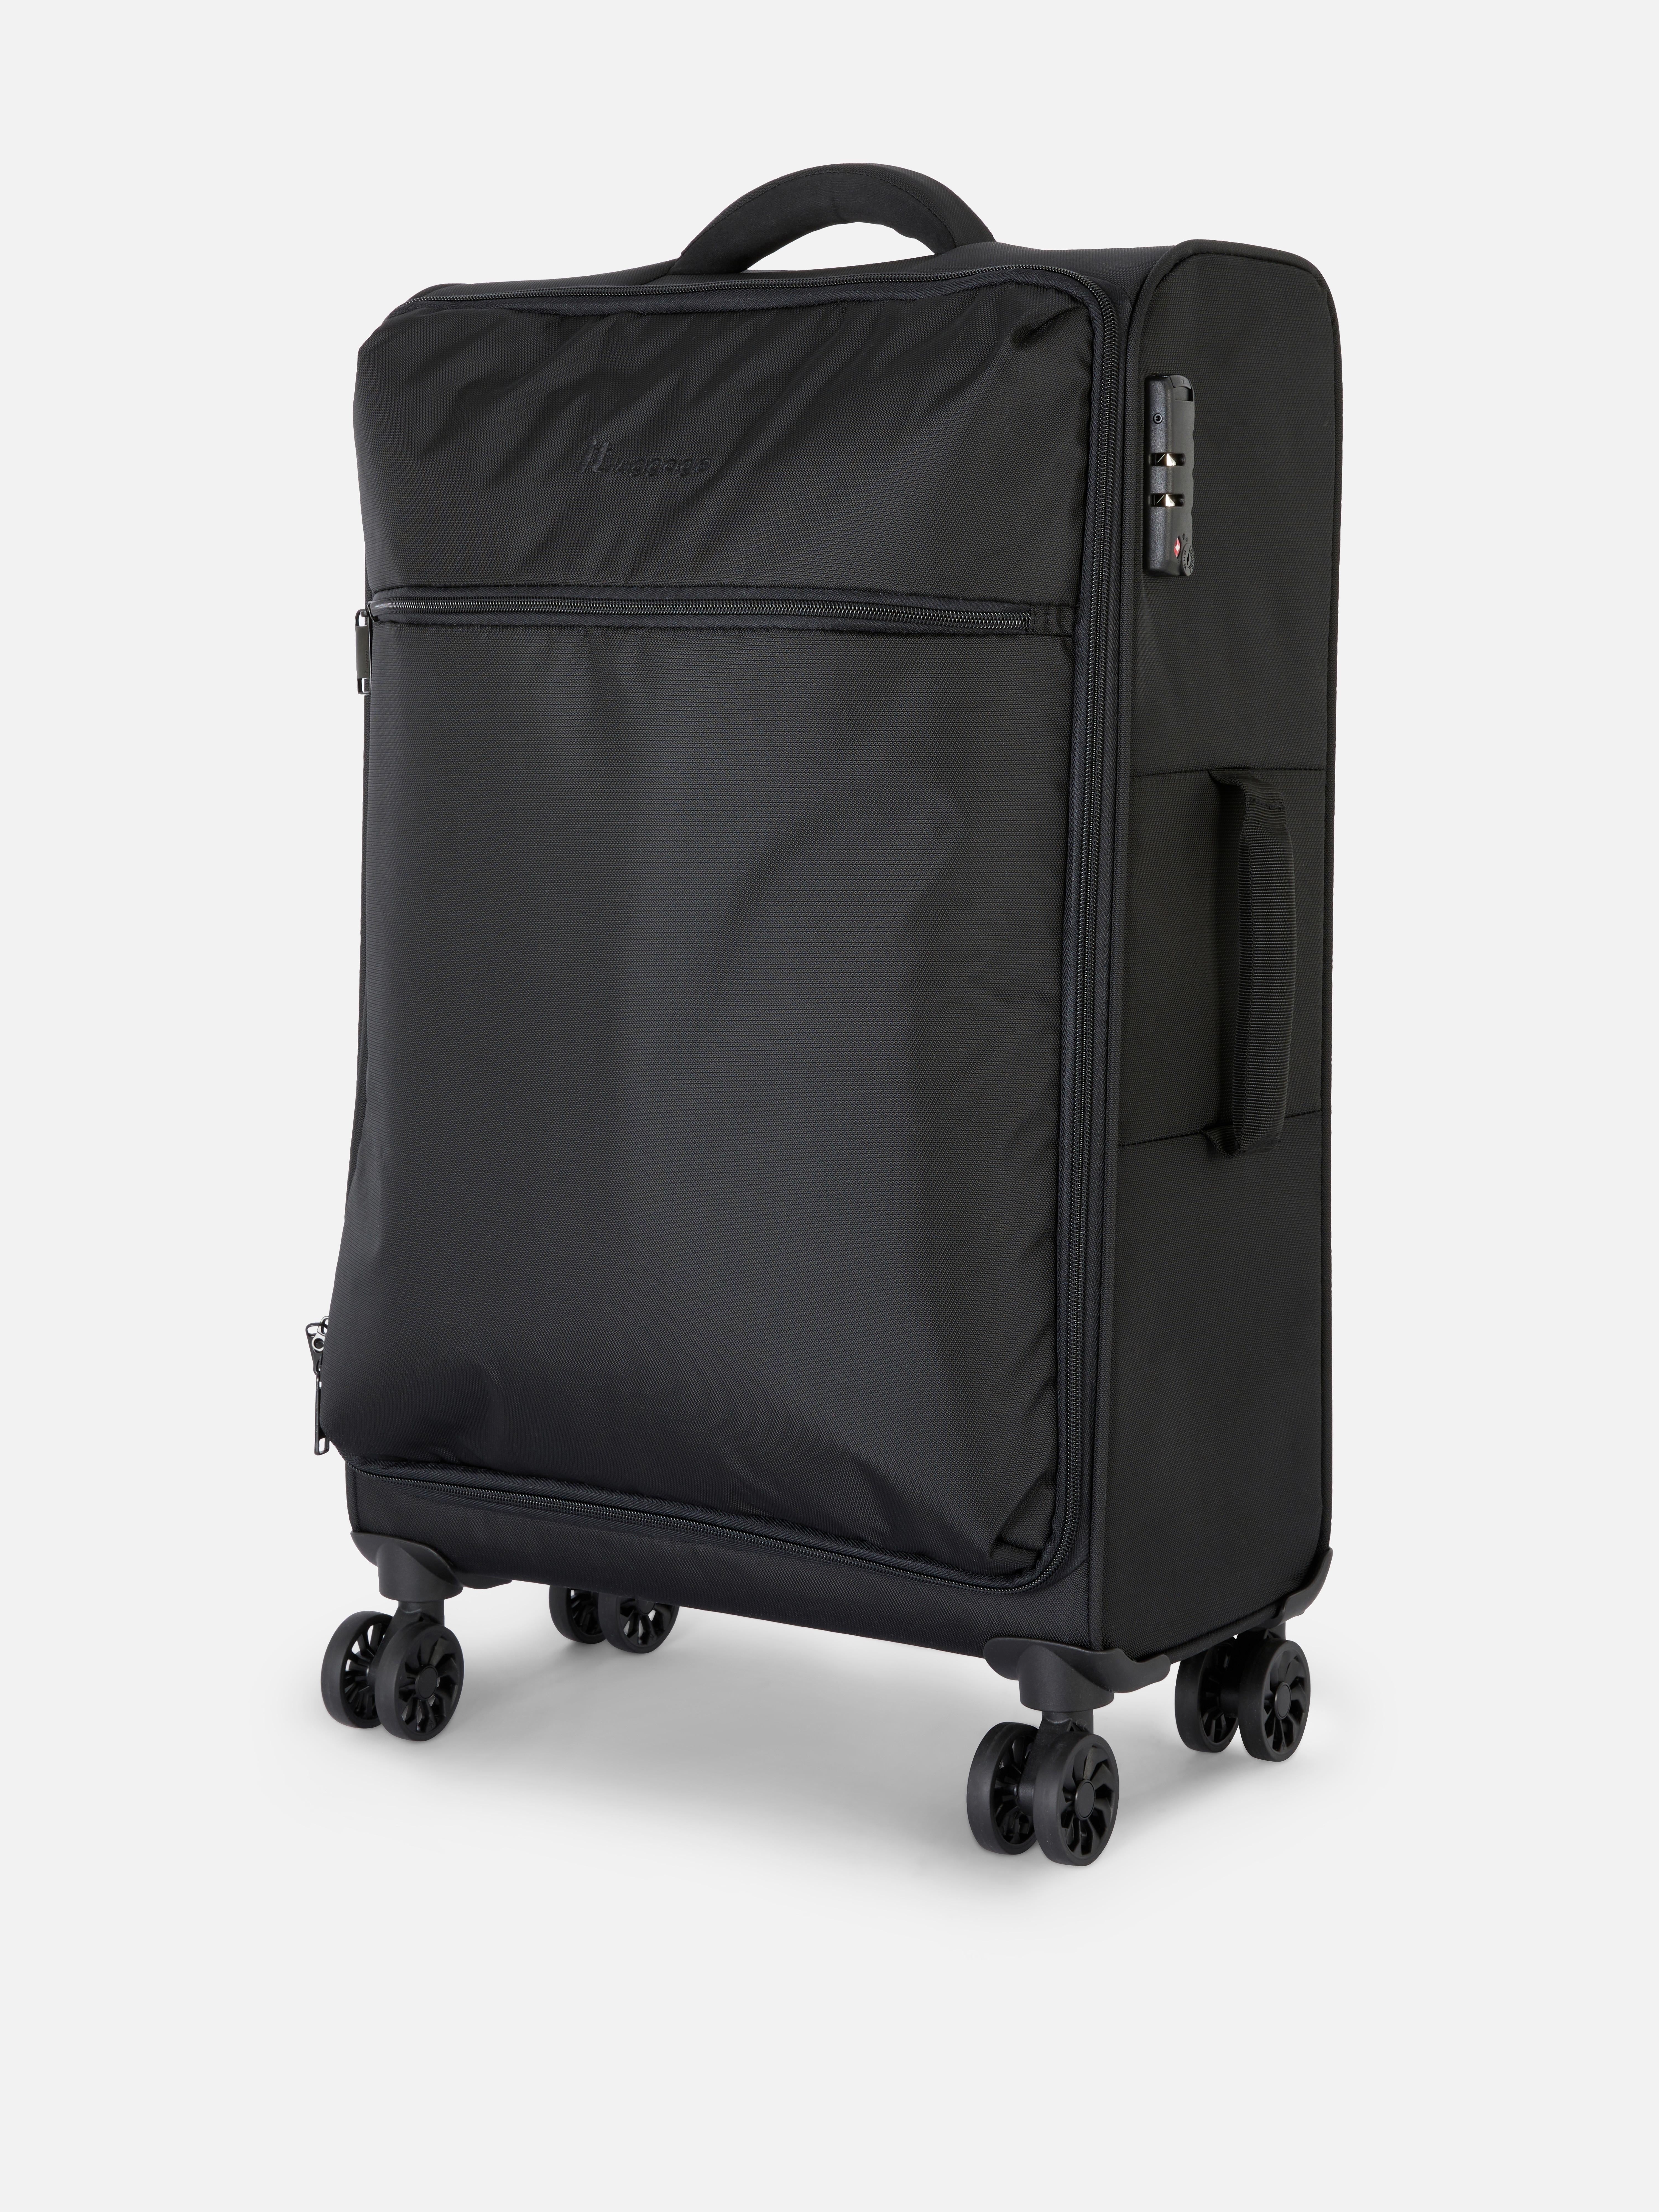 it Luggage Soft Shell Suitcase